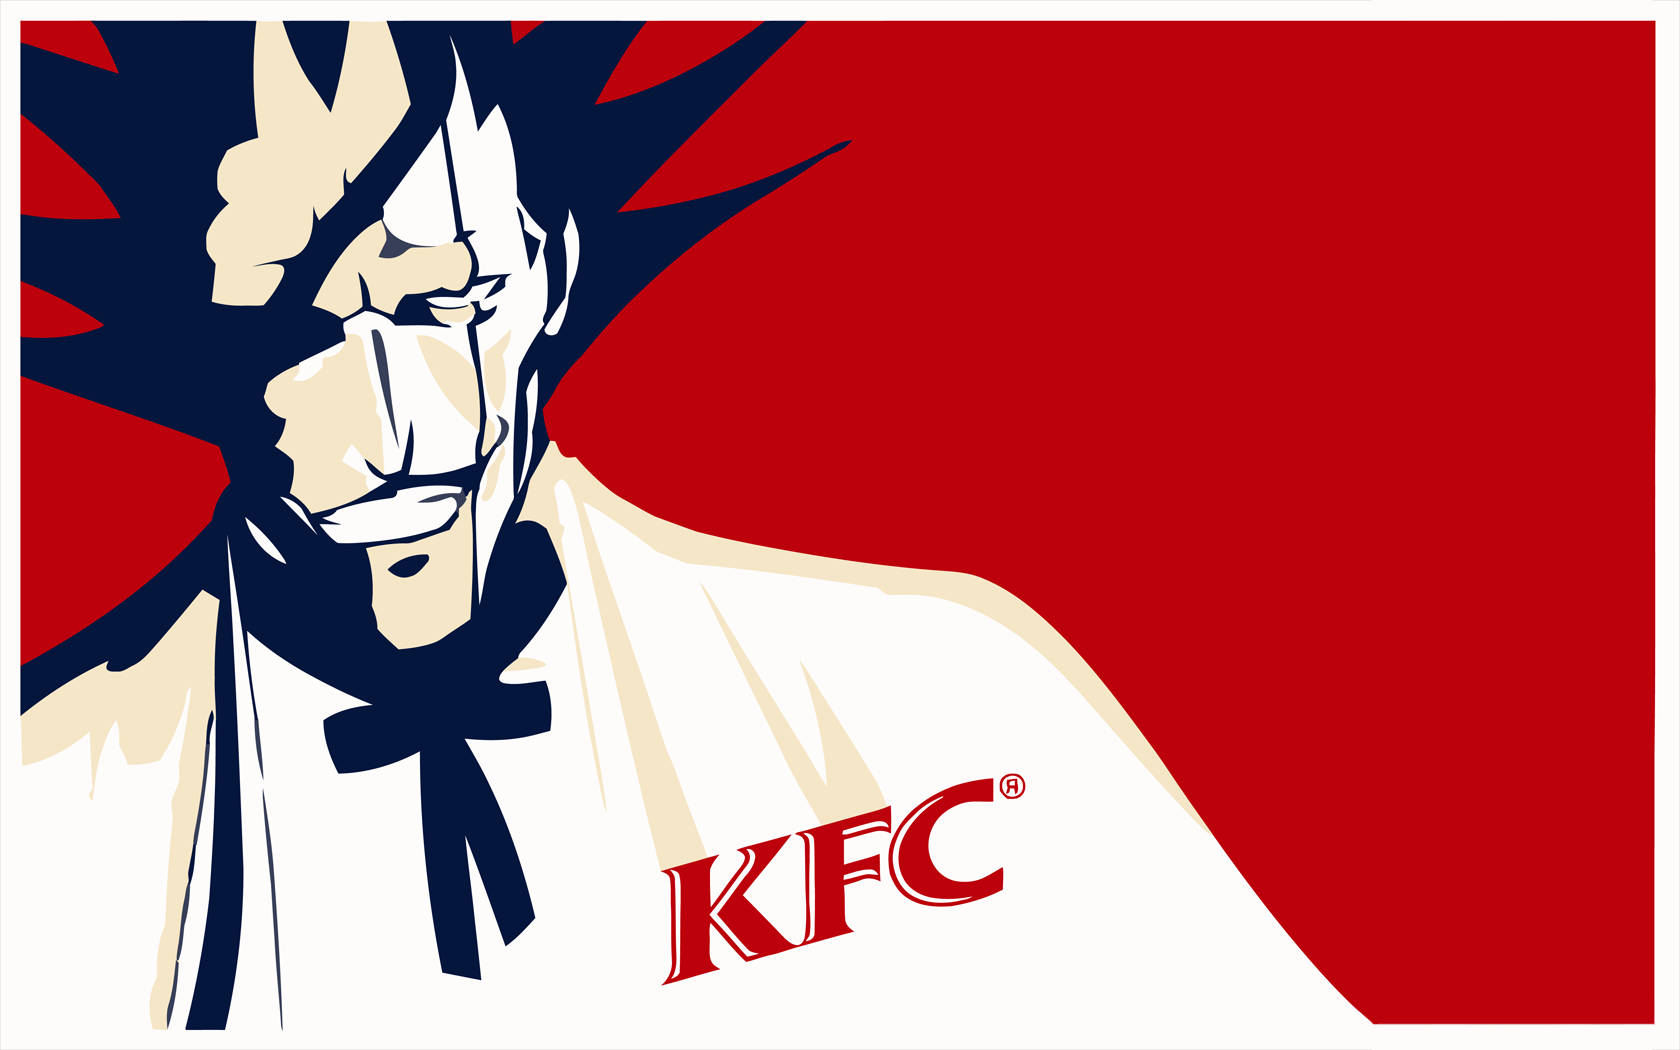 New Japanese KFC logo 2020 - anime version - YouTube